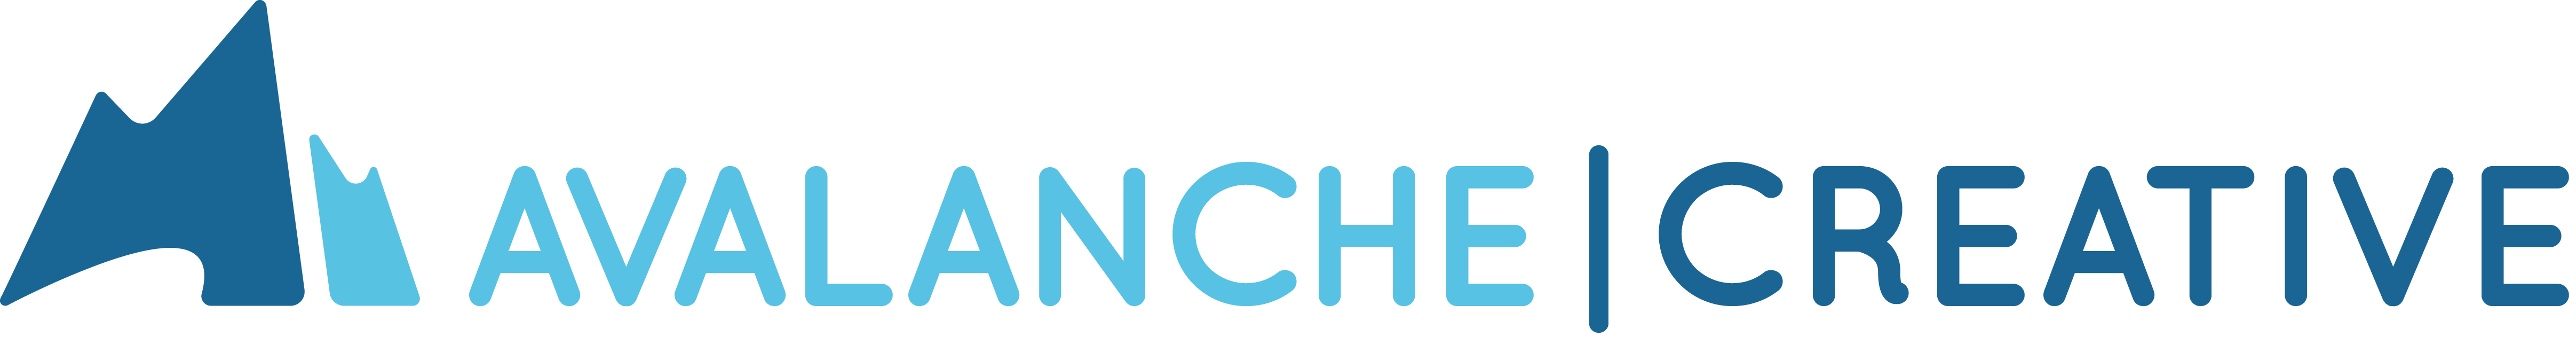 avalanche creative logo